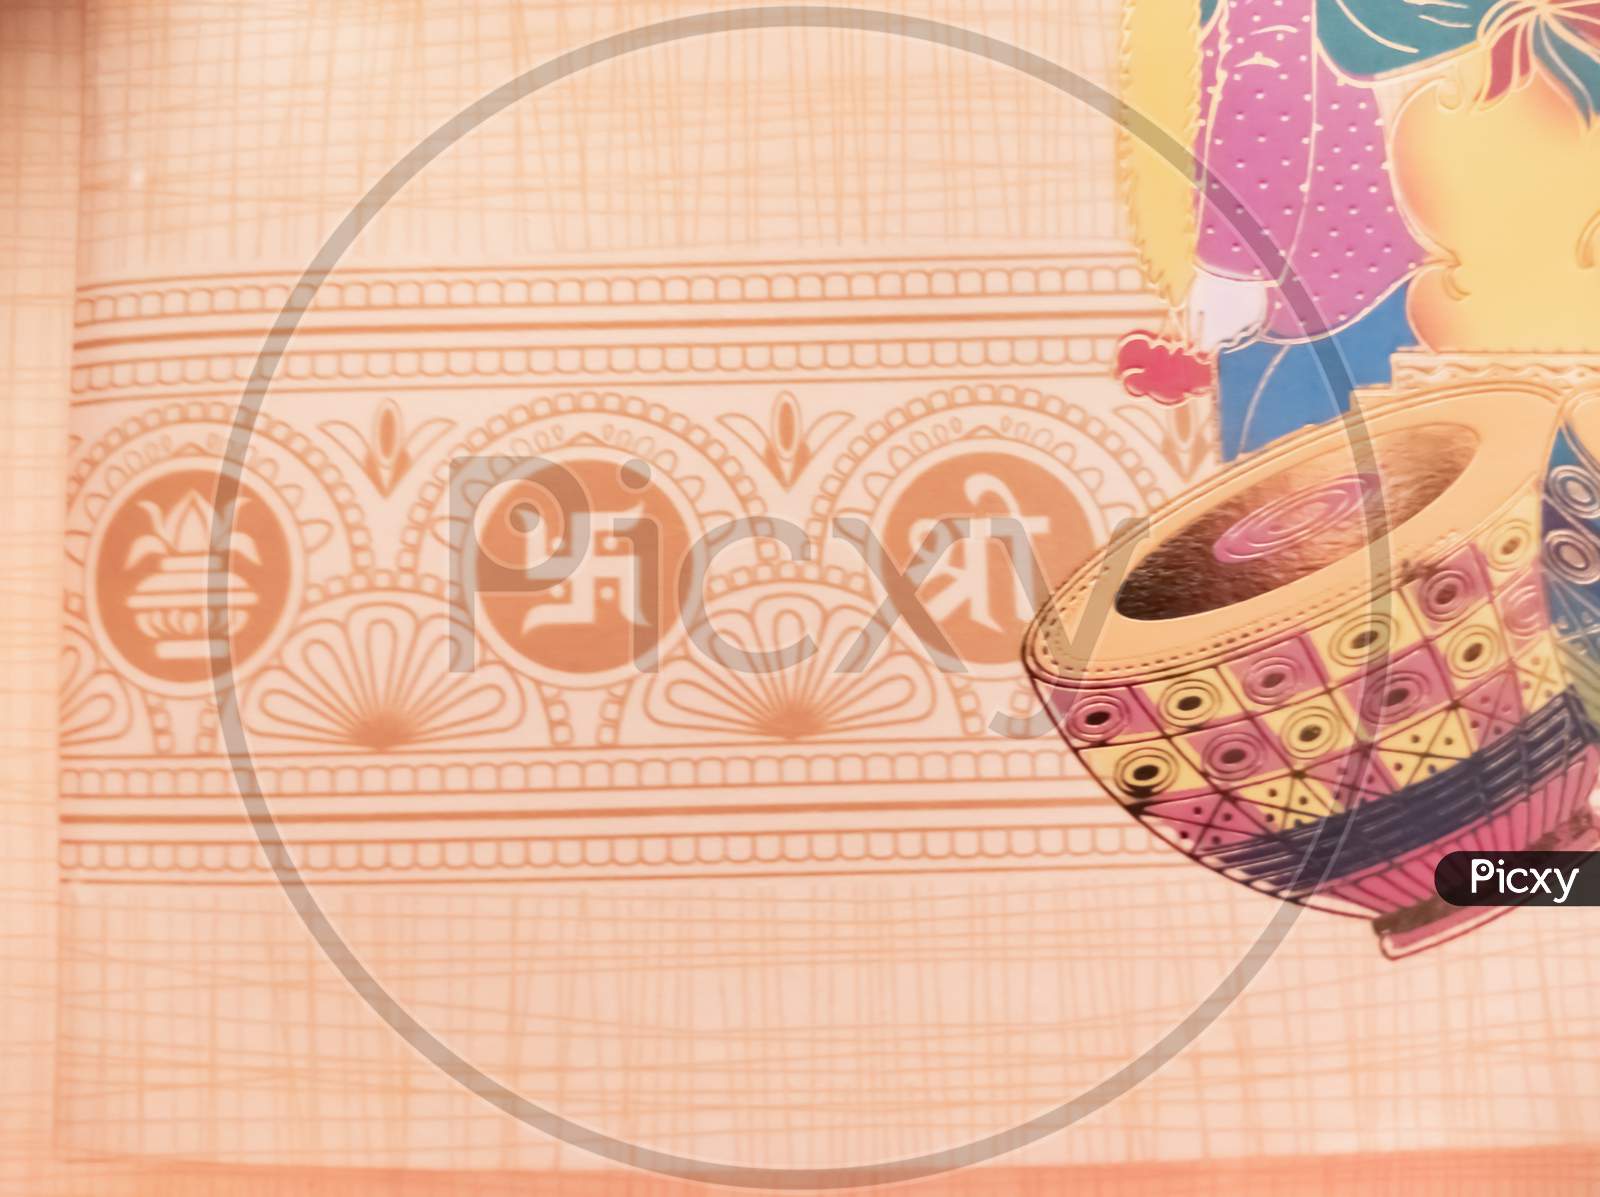 Swastik symbol on Indian traditional wedding invitation card.